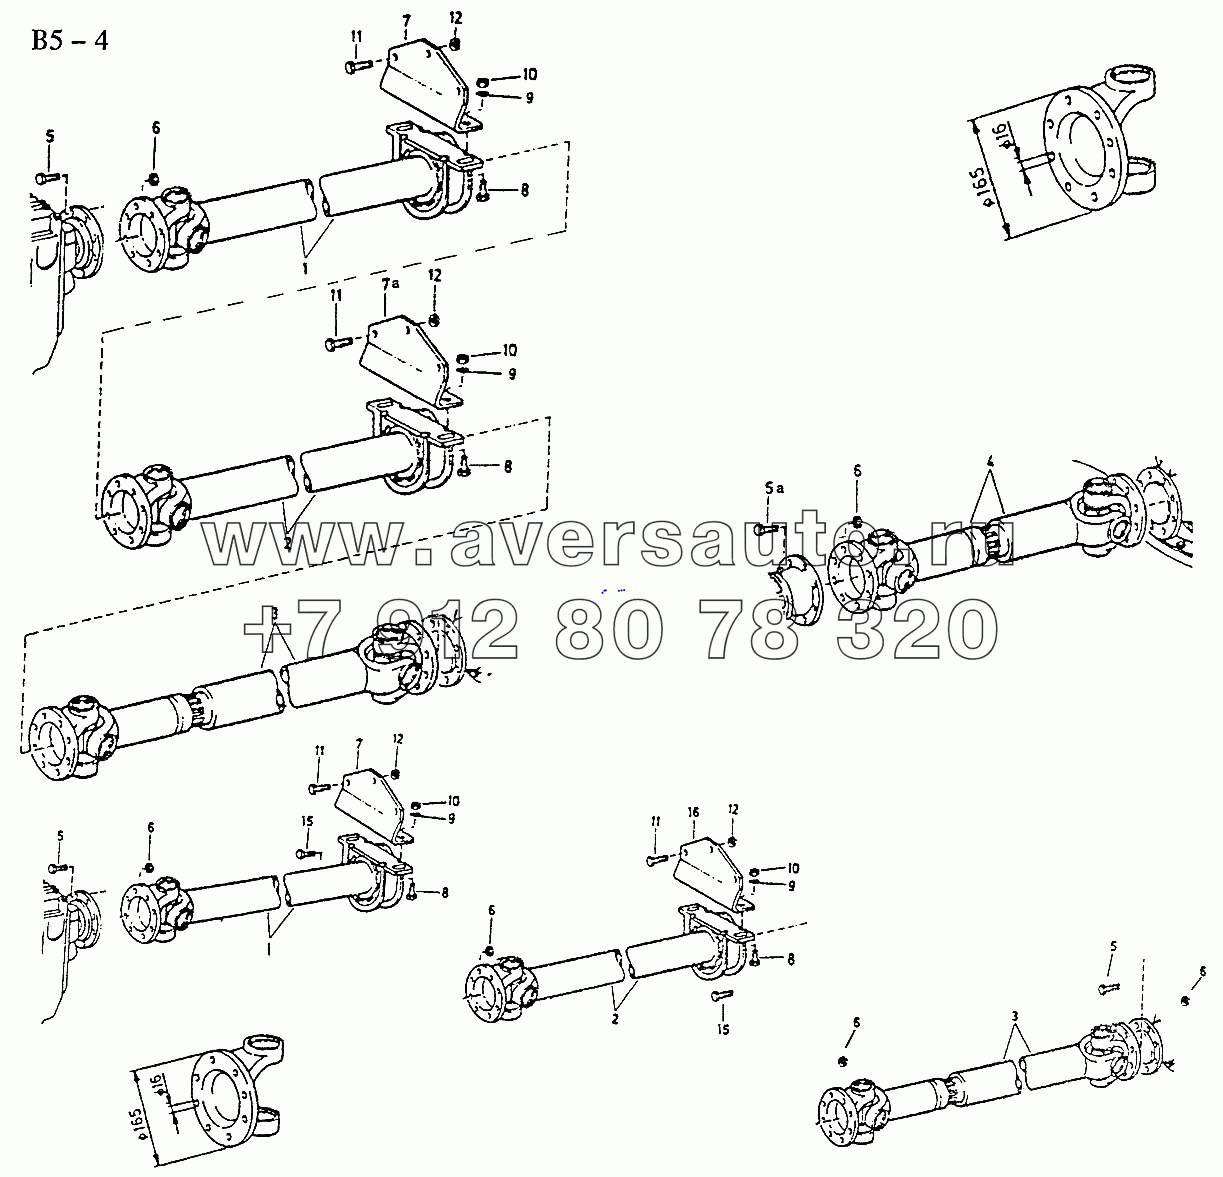 6x4, 8x4 PROPELLER SHAFTS FOR LONG WHEEL BASE 266, 290, 336/N56/6x4 (Fuller gearbox) (B5-4-5)